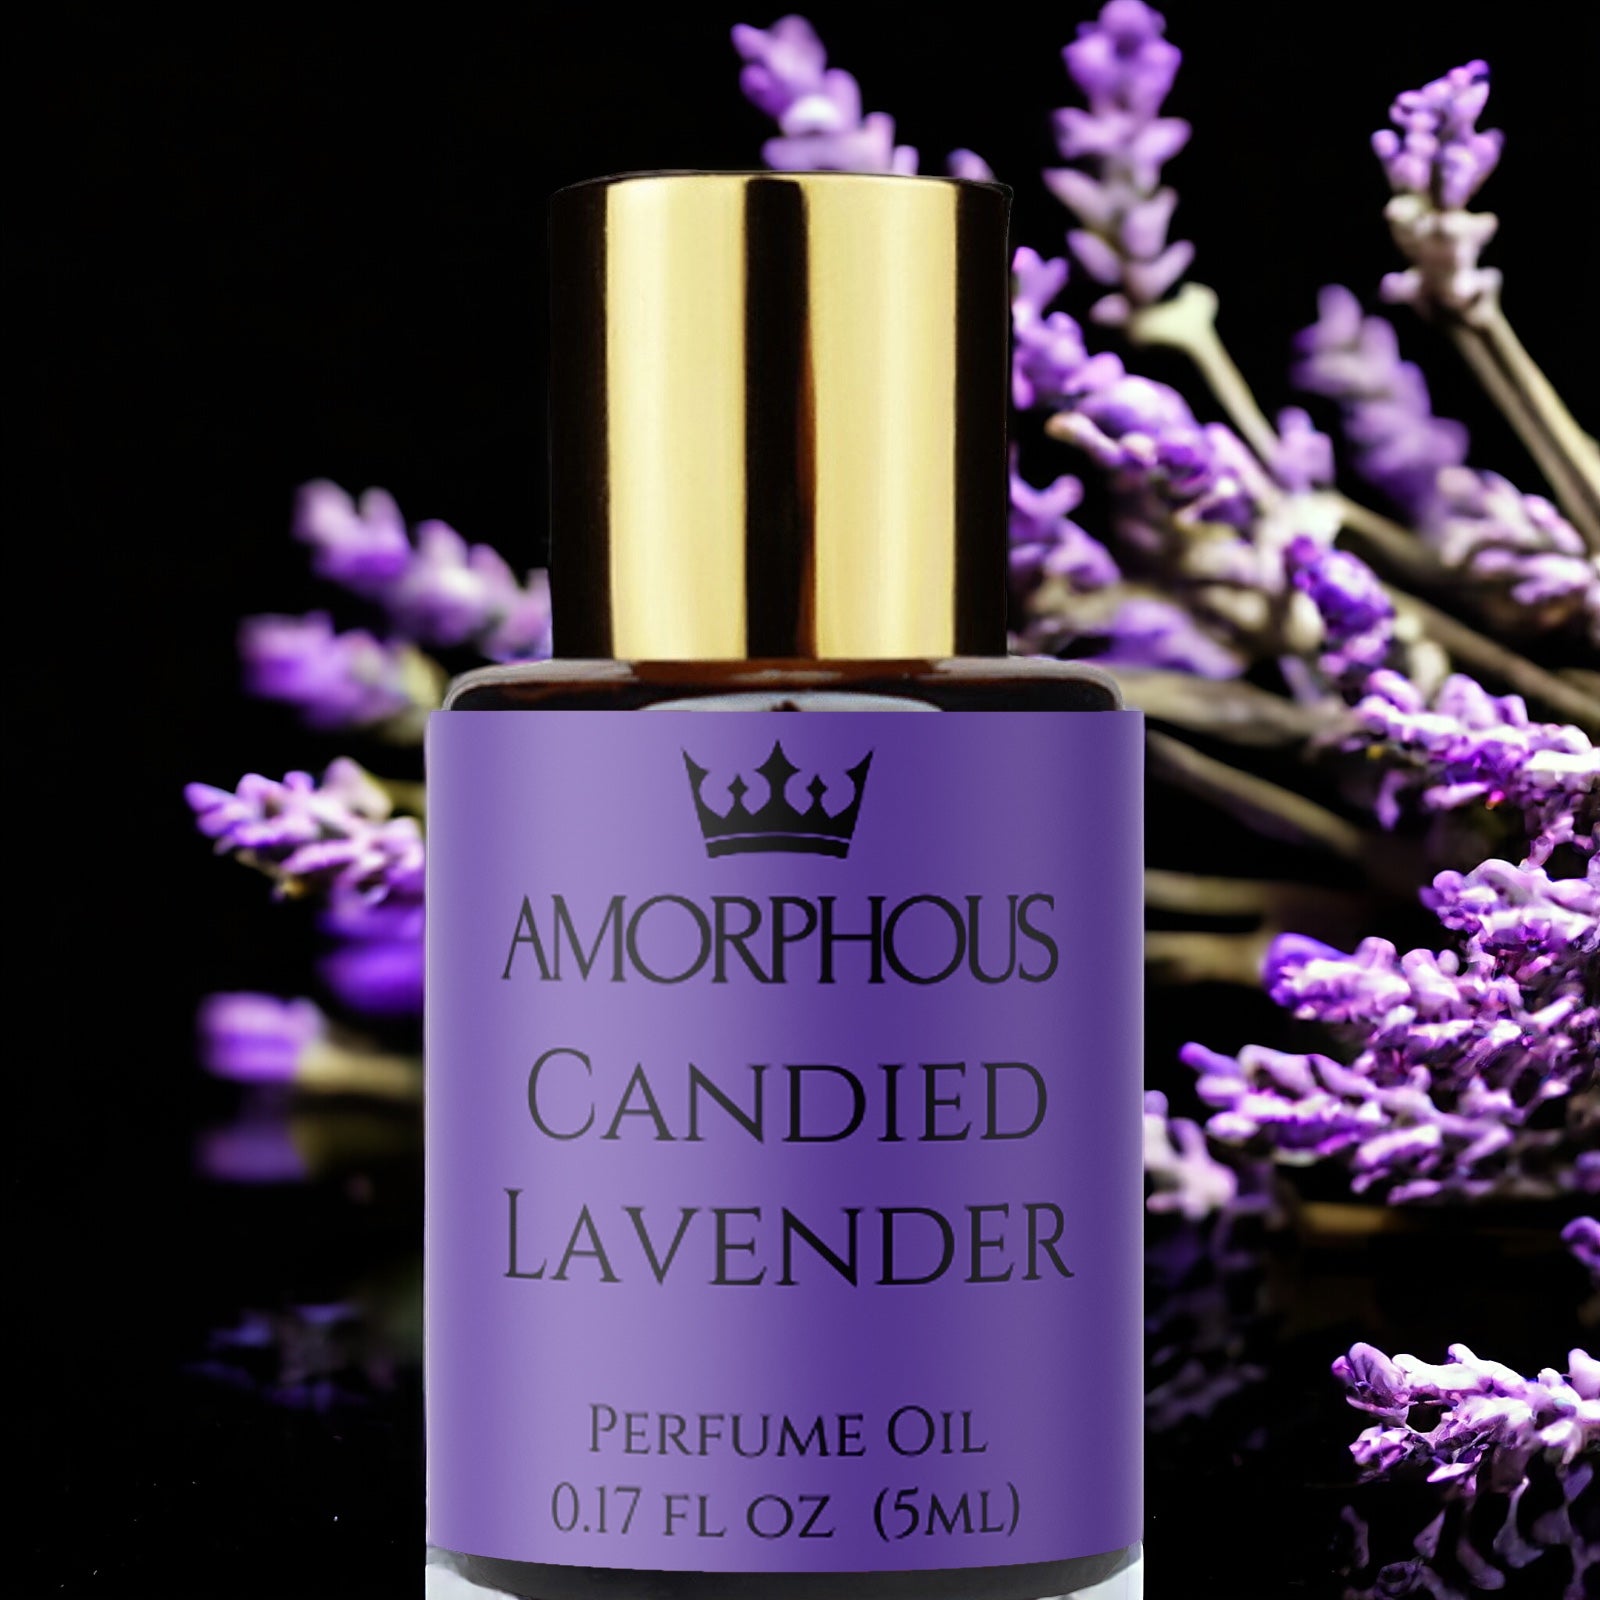 candied lavender fragrance